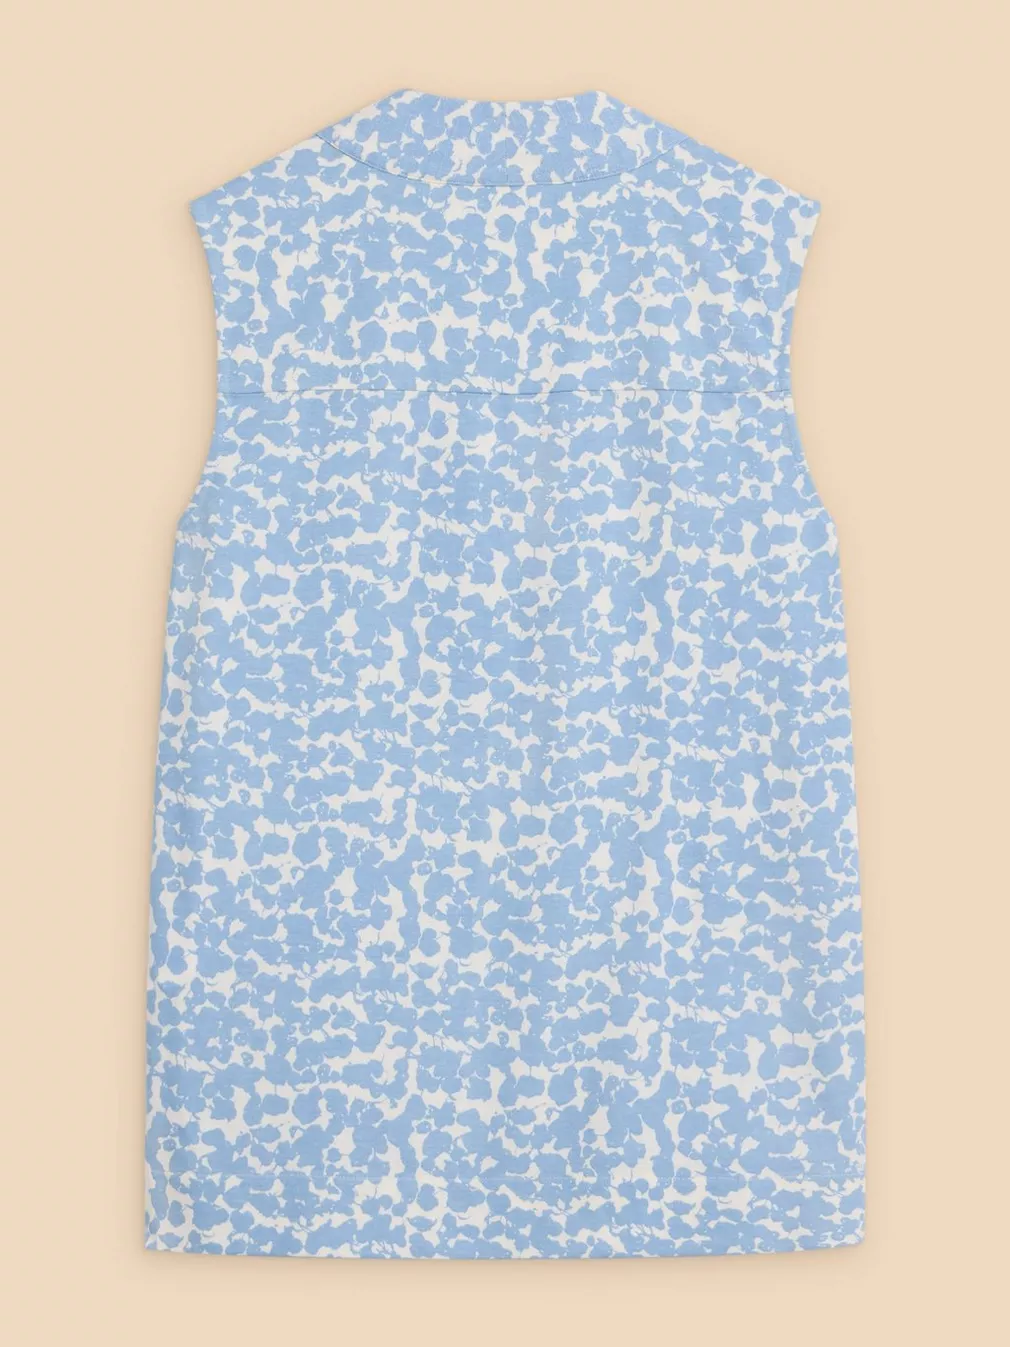 White Stuff Celia Jersey Mix Shirt - Blue Print Clothing - Tops - Shirts - Sleeveless Knits by White Stuff | Grace the Boutique